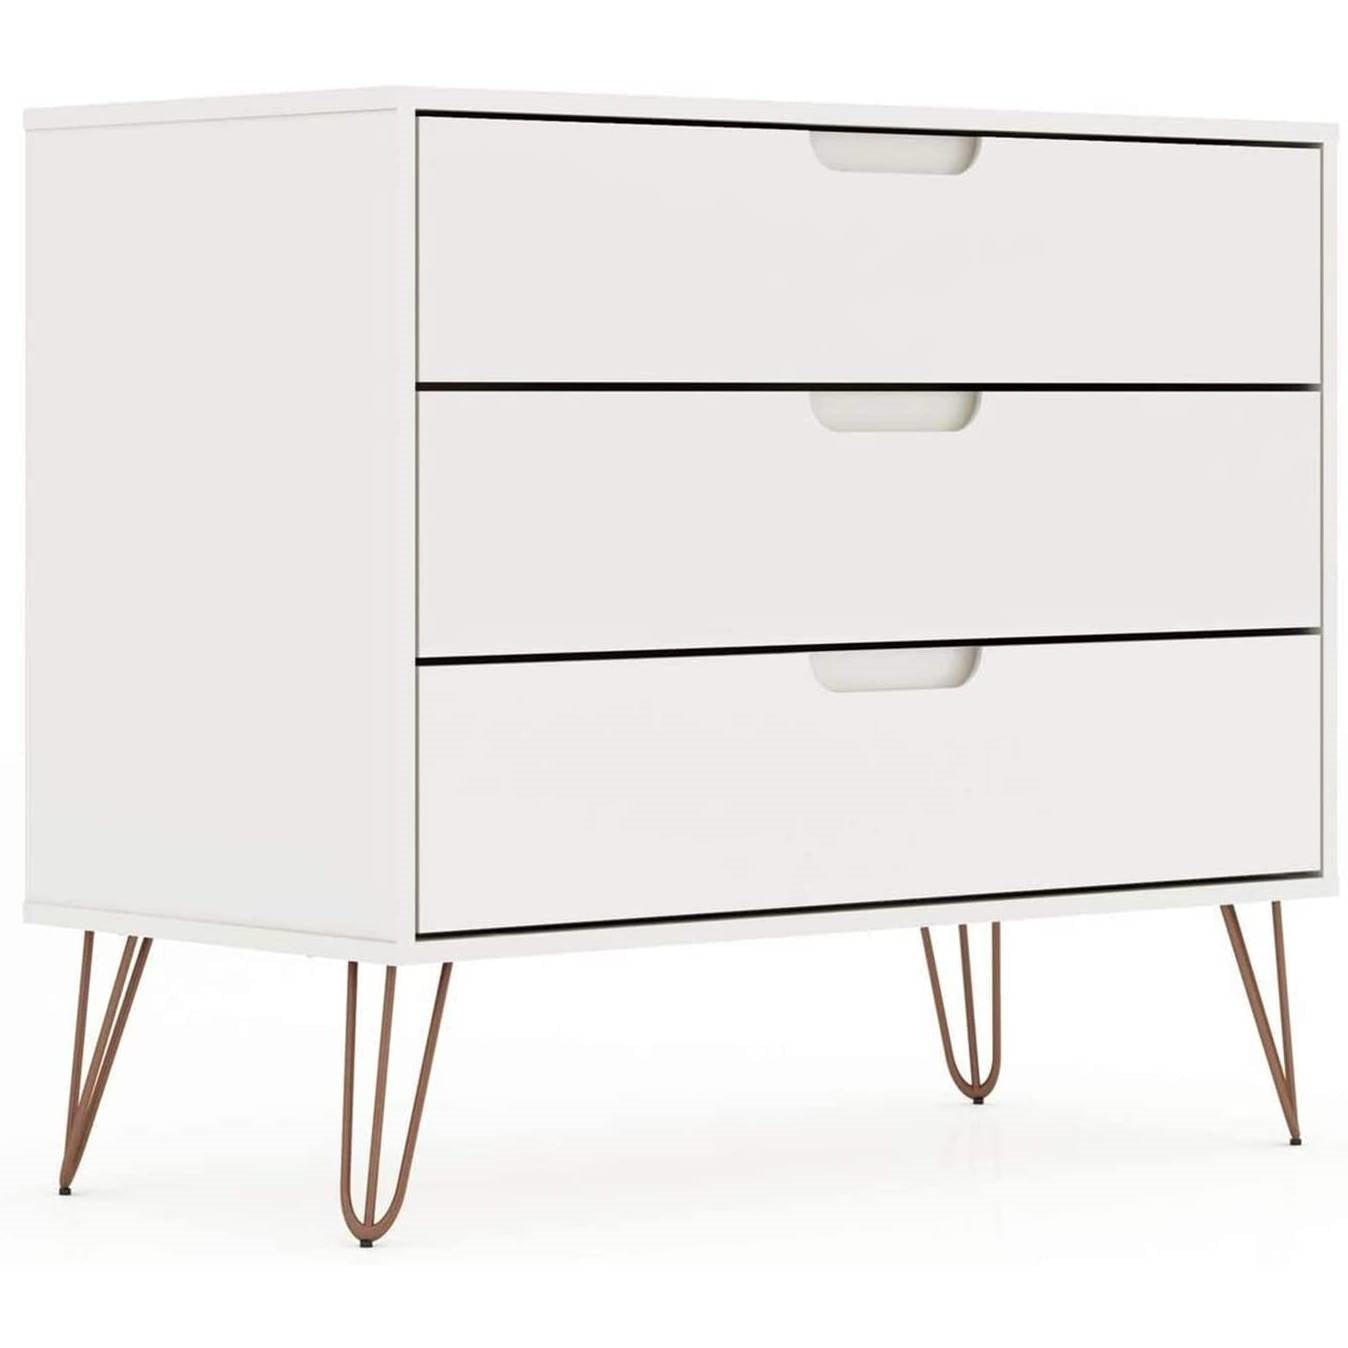 Bedroom > Nightstand And Dressers - Modern Scandinavian Style Bedroom 3-Drawer Dresser In White Wood Finish